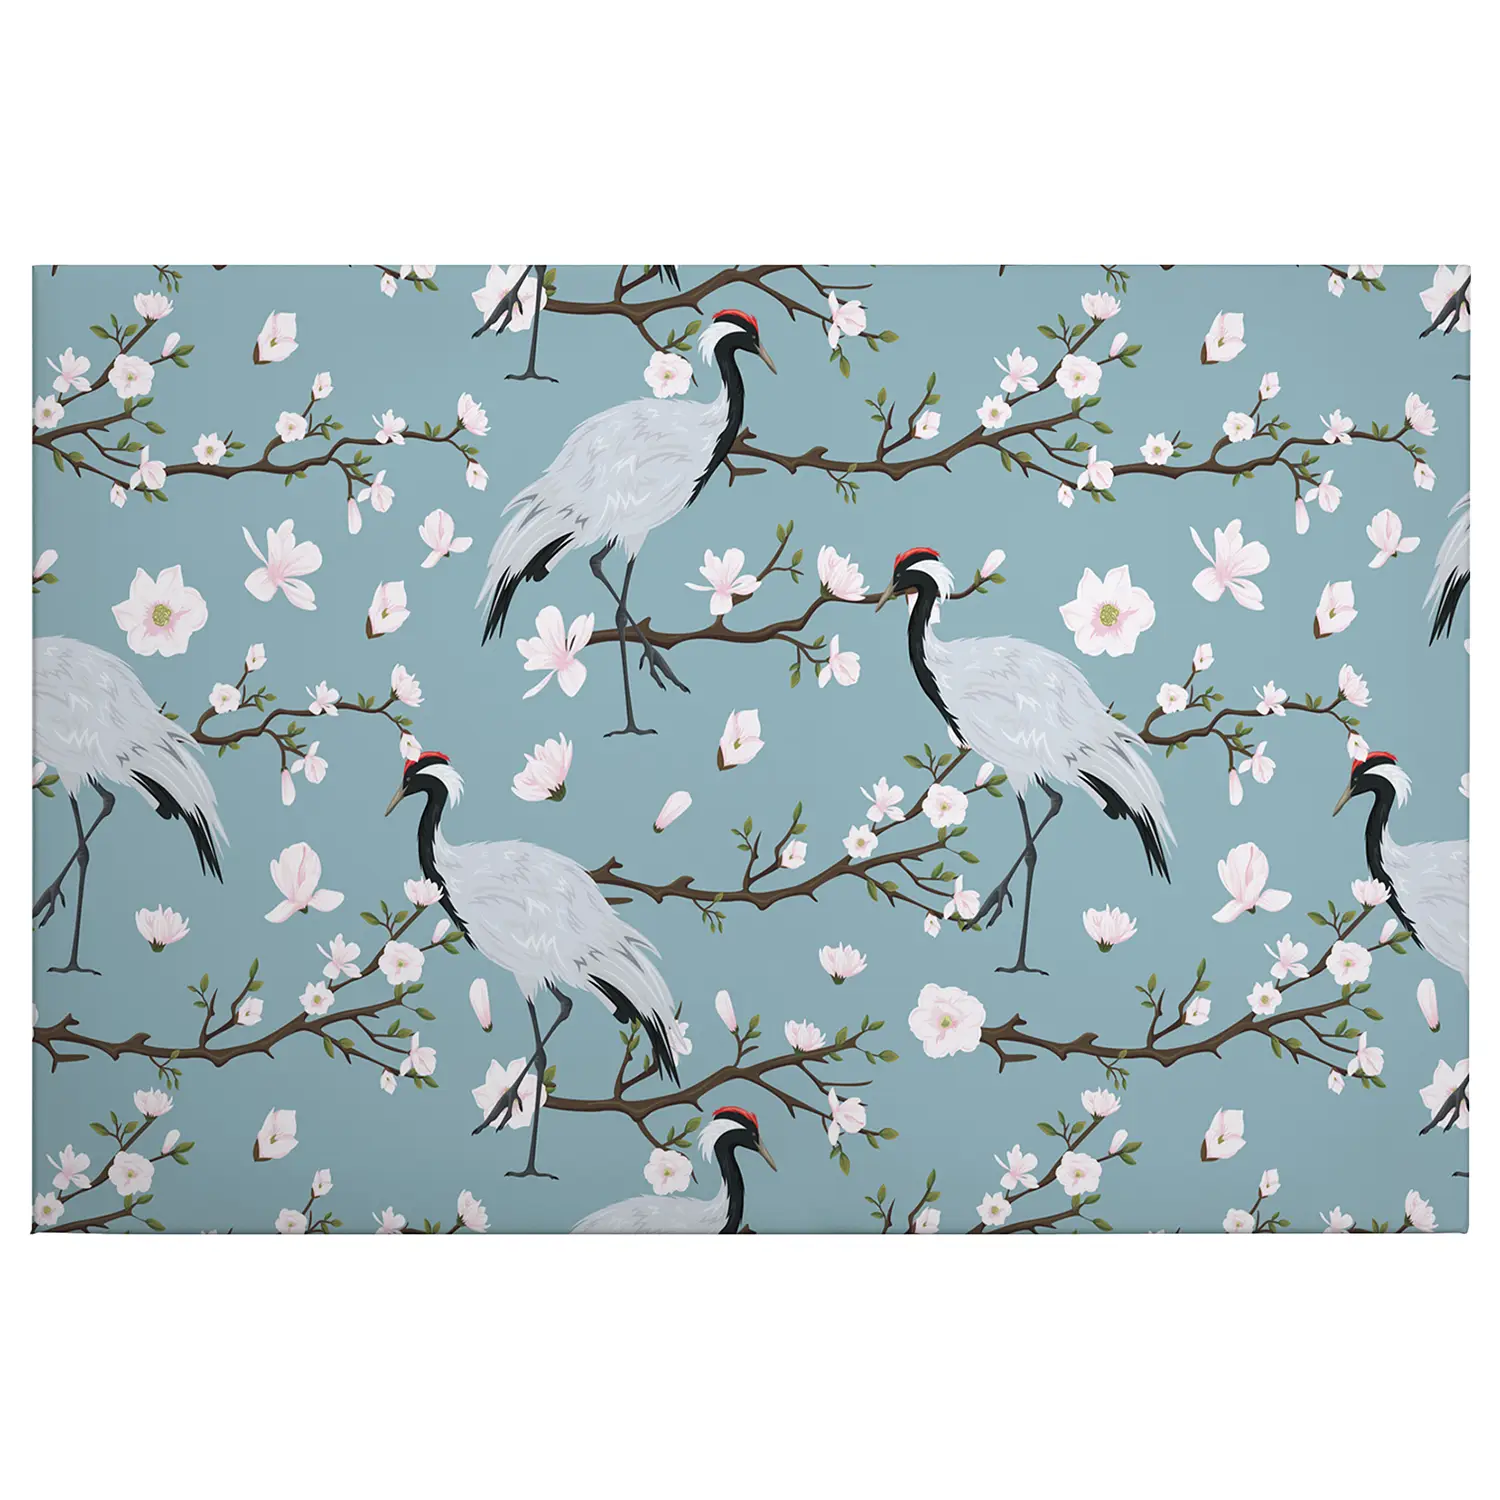 Cranes Wandbild Japanese